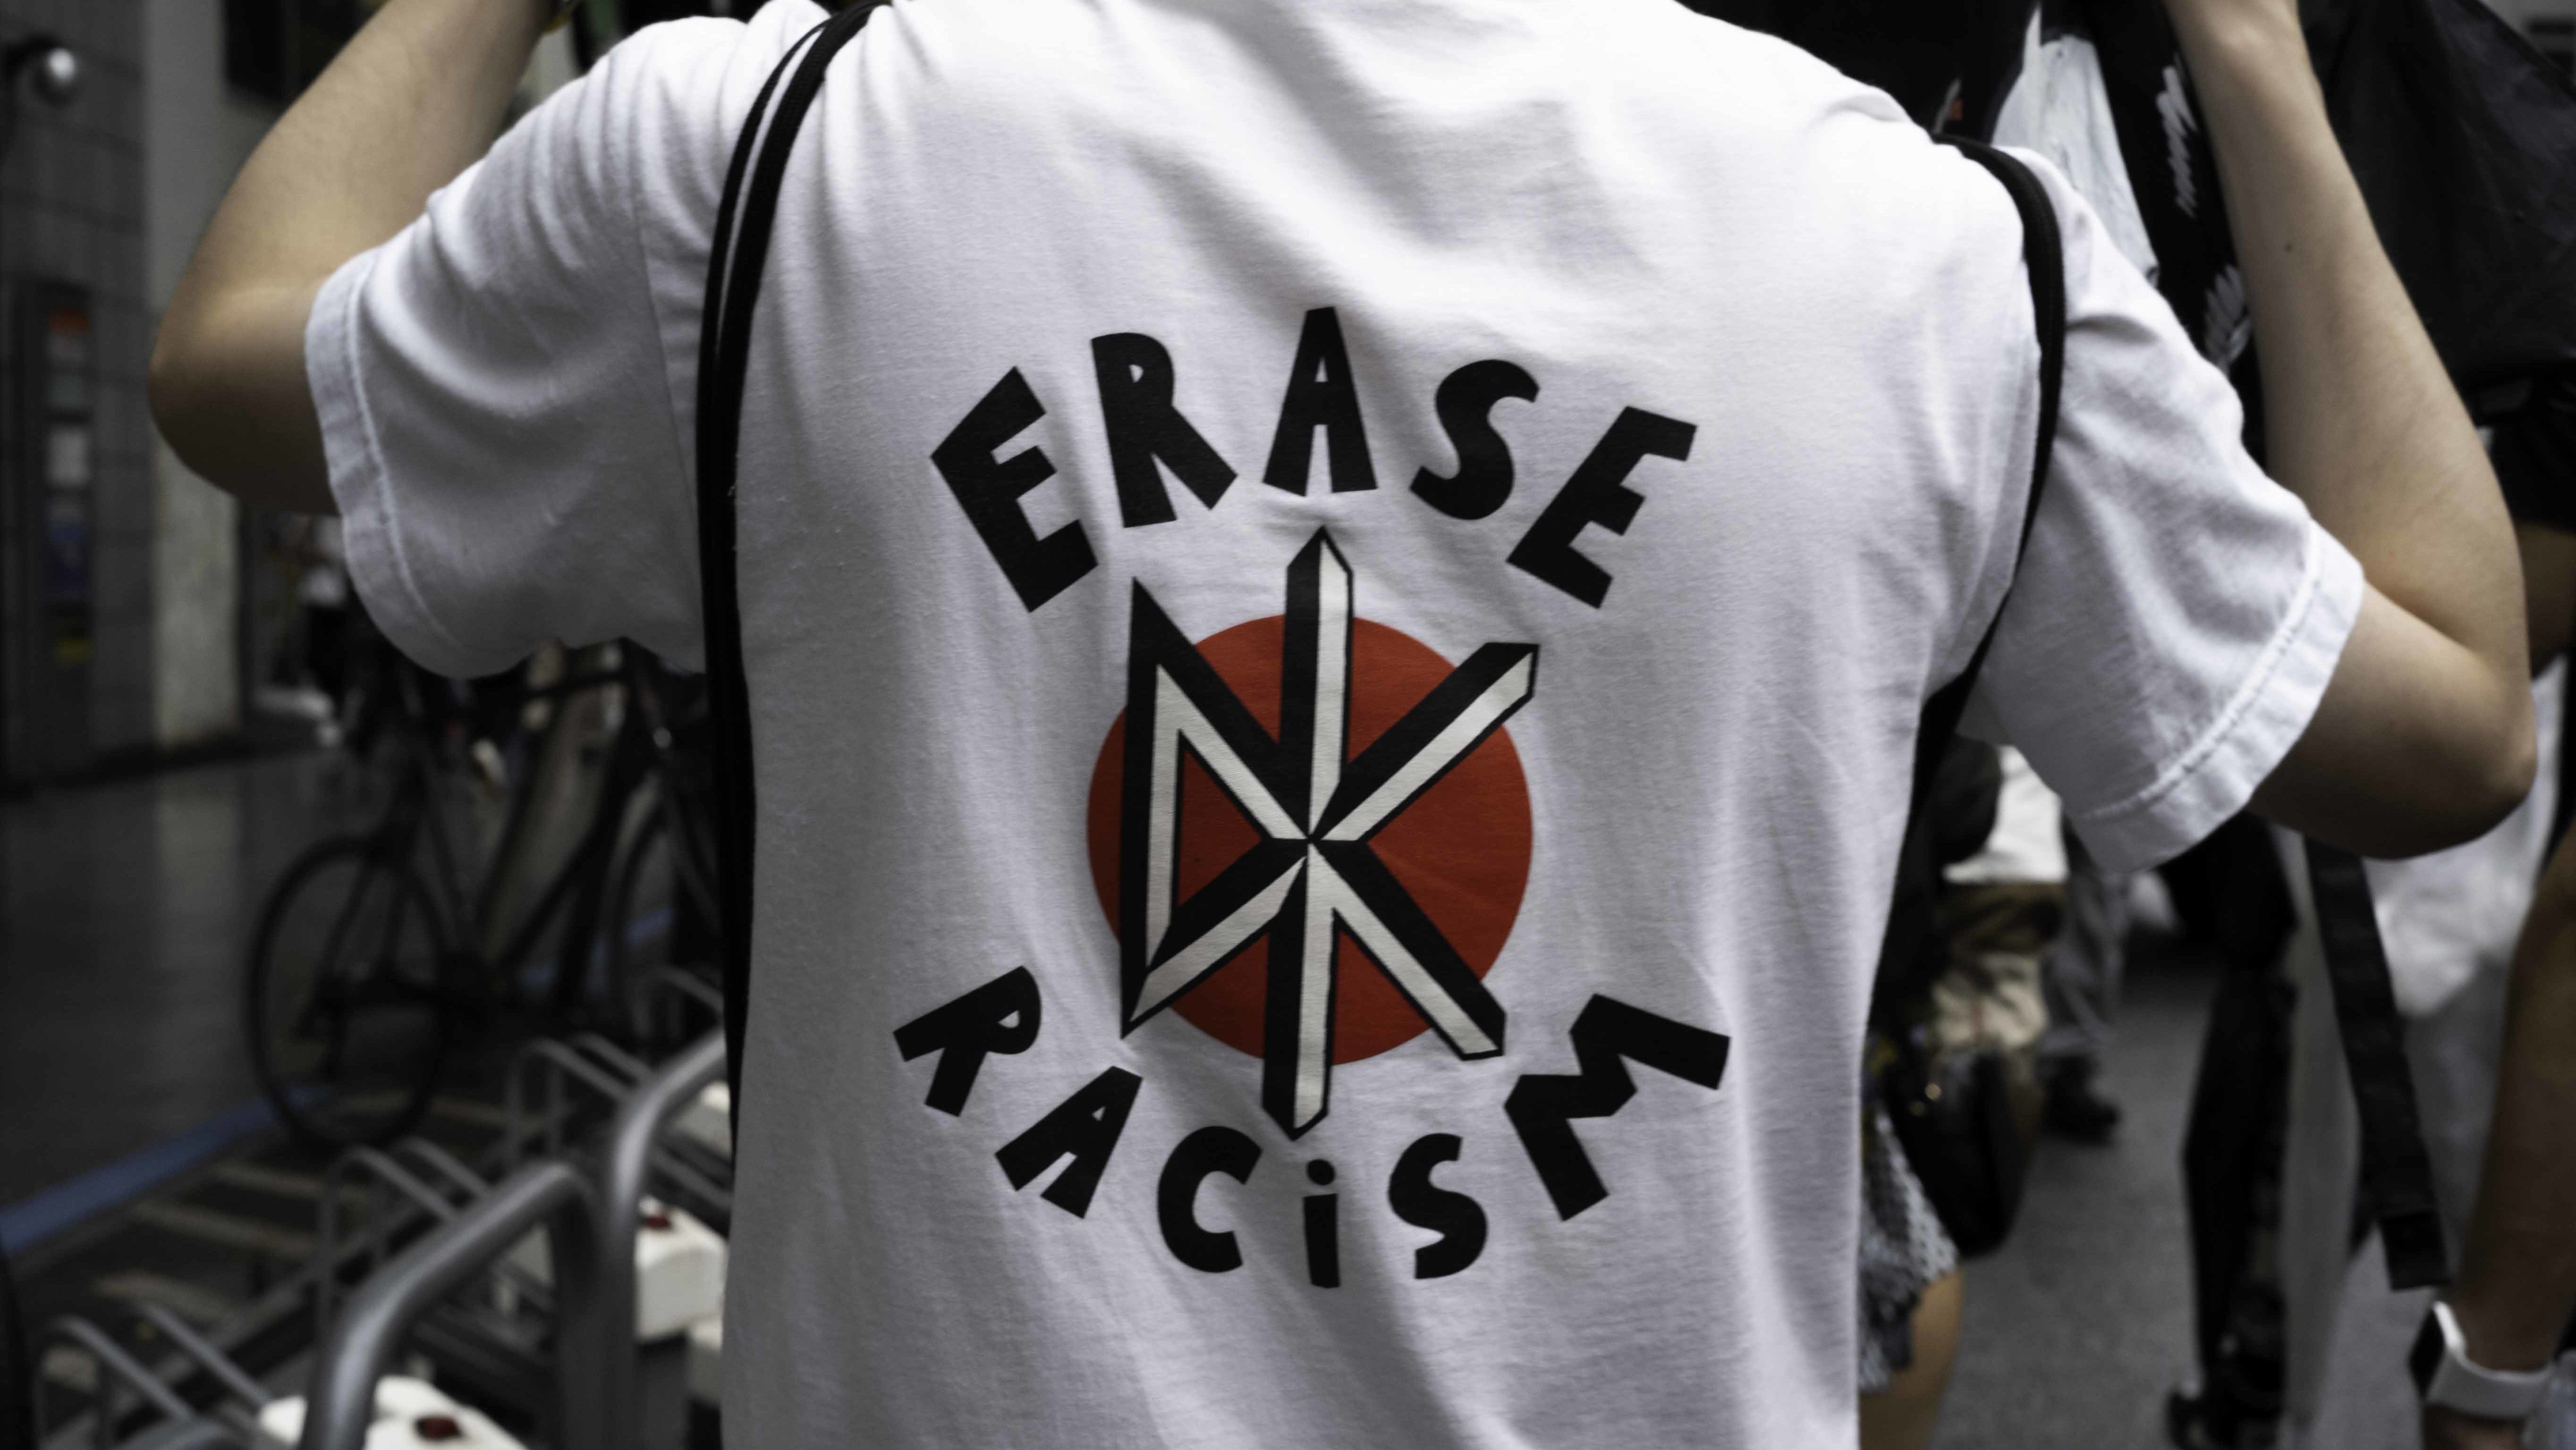 Erase Racism T-shrit